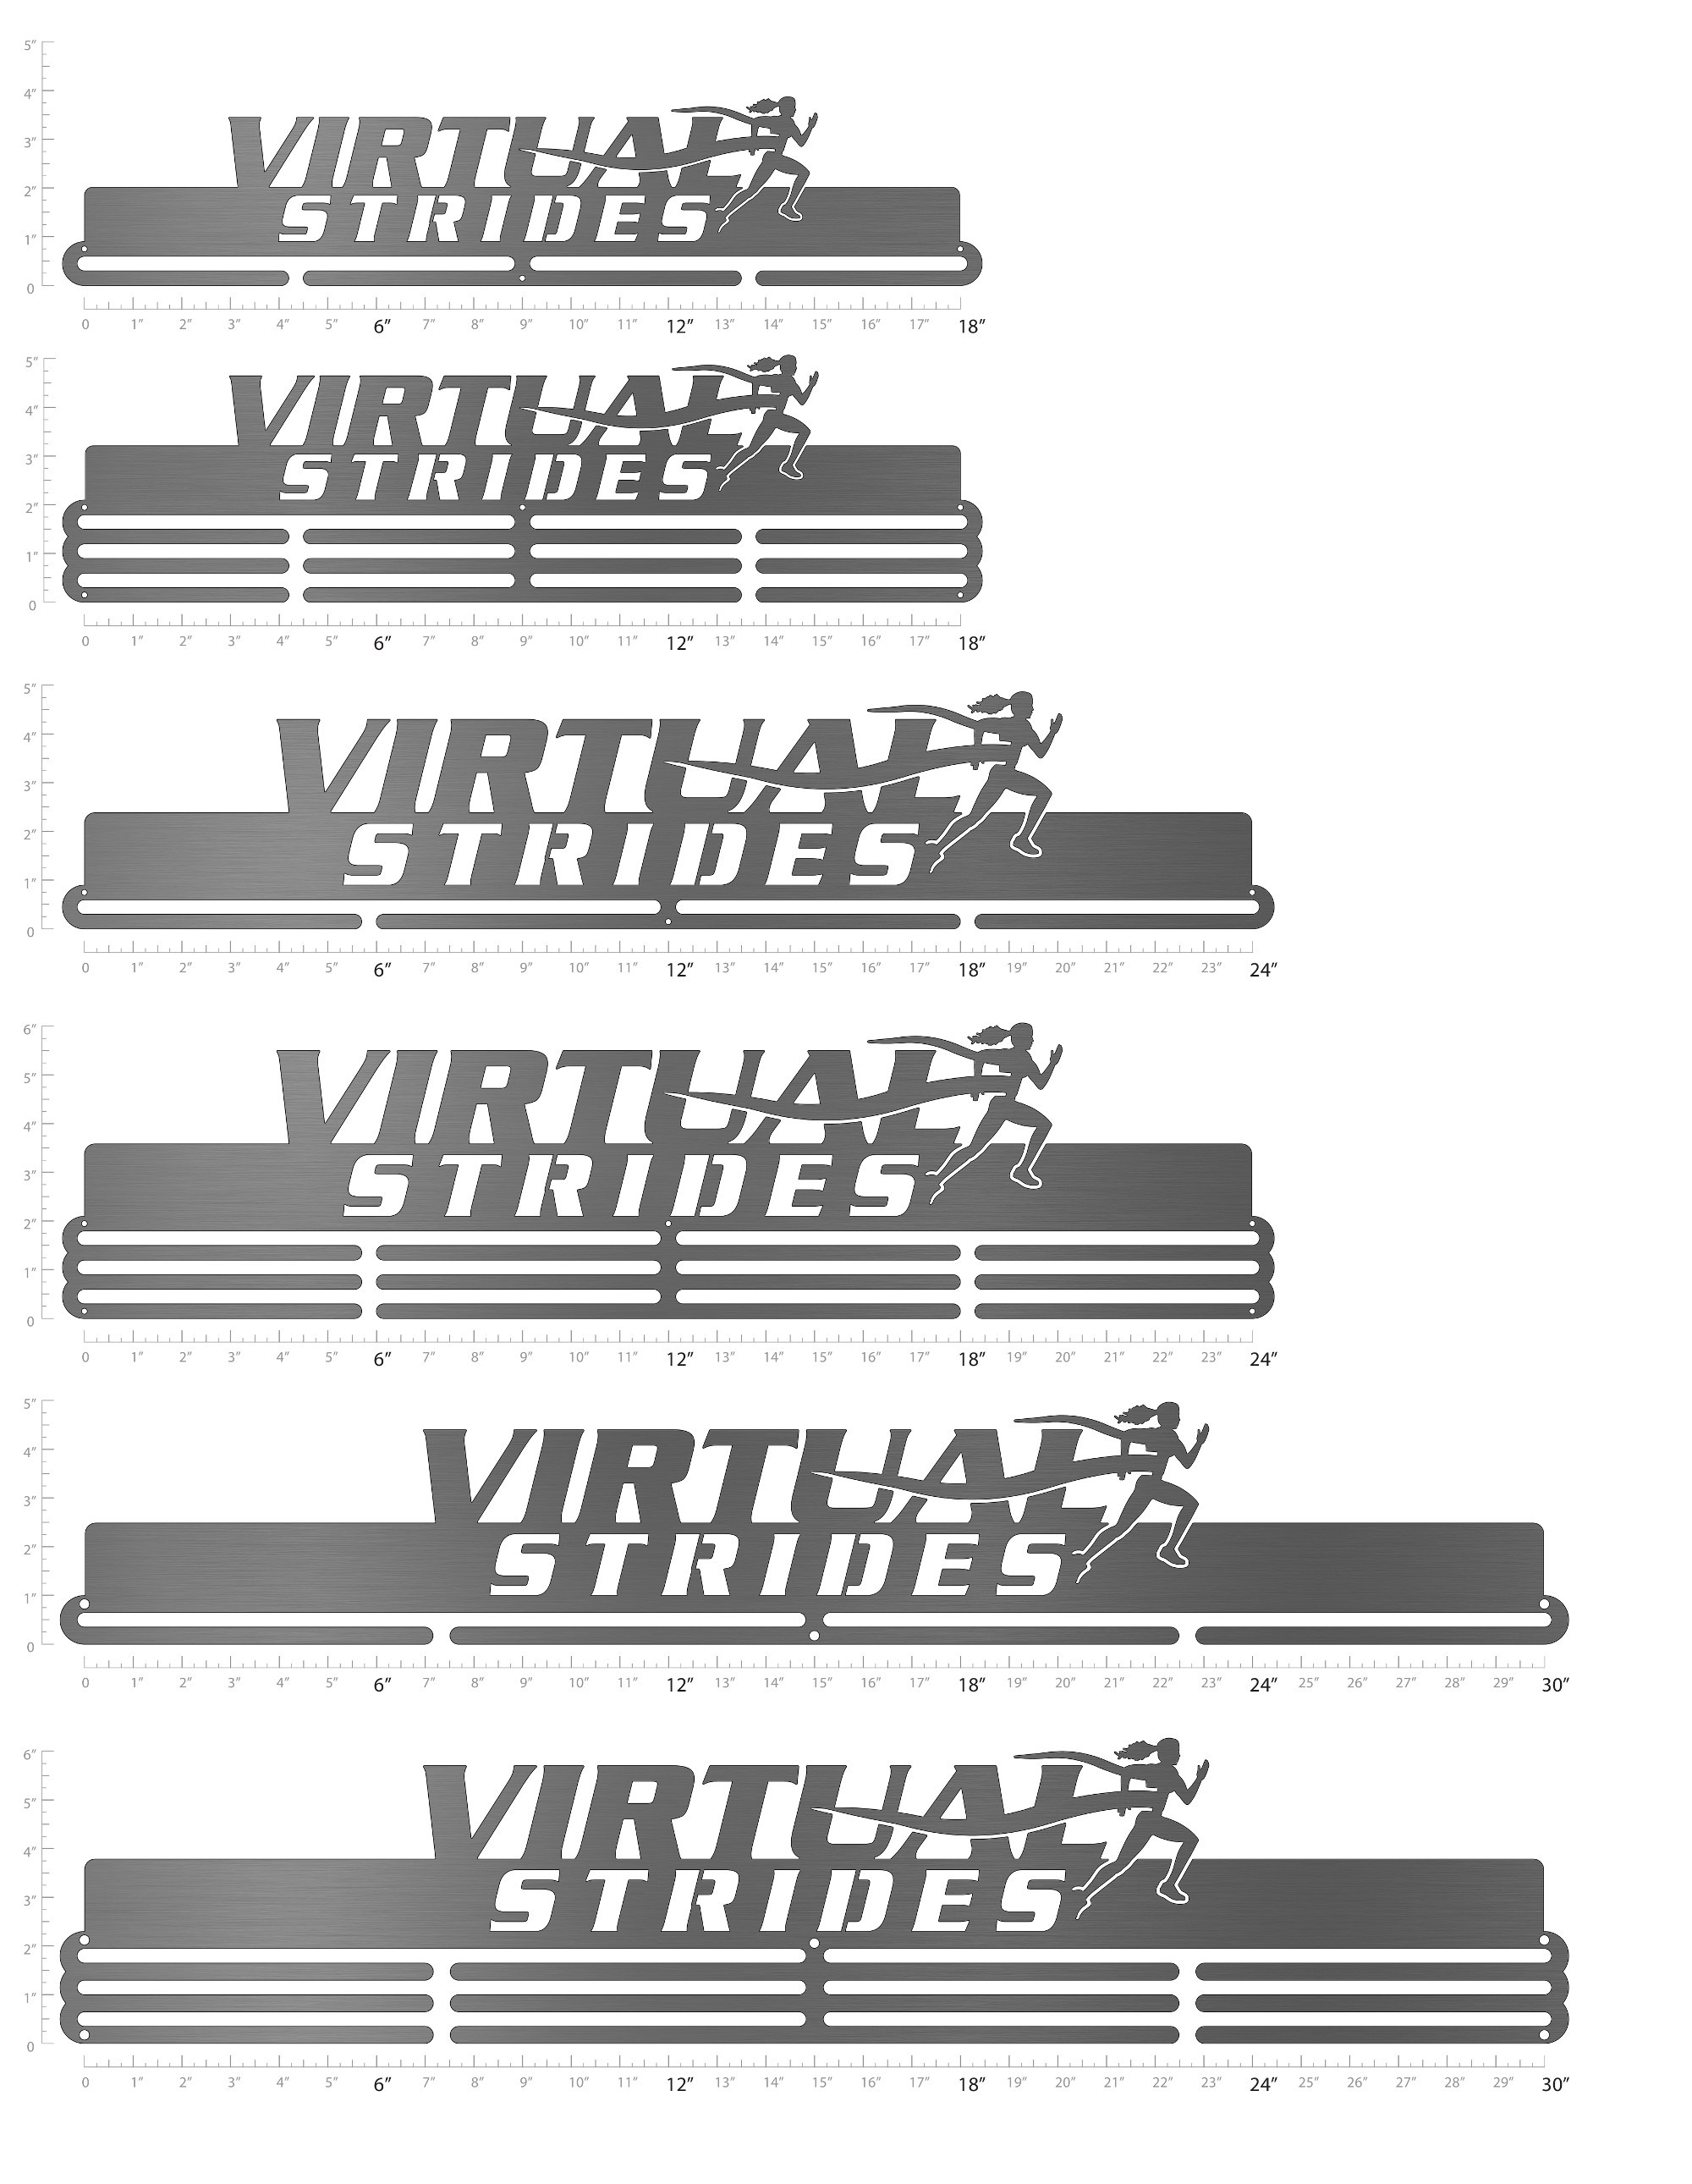 Virtual Strides